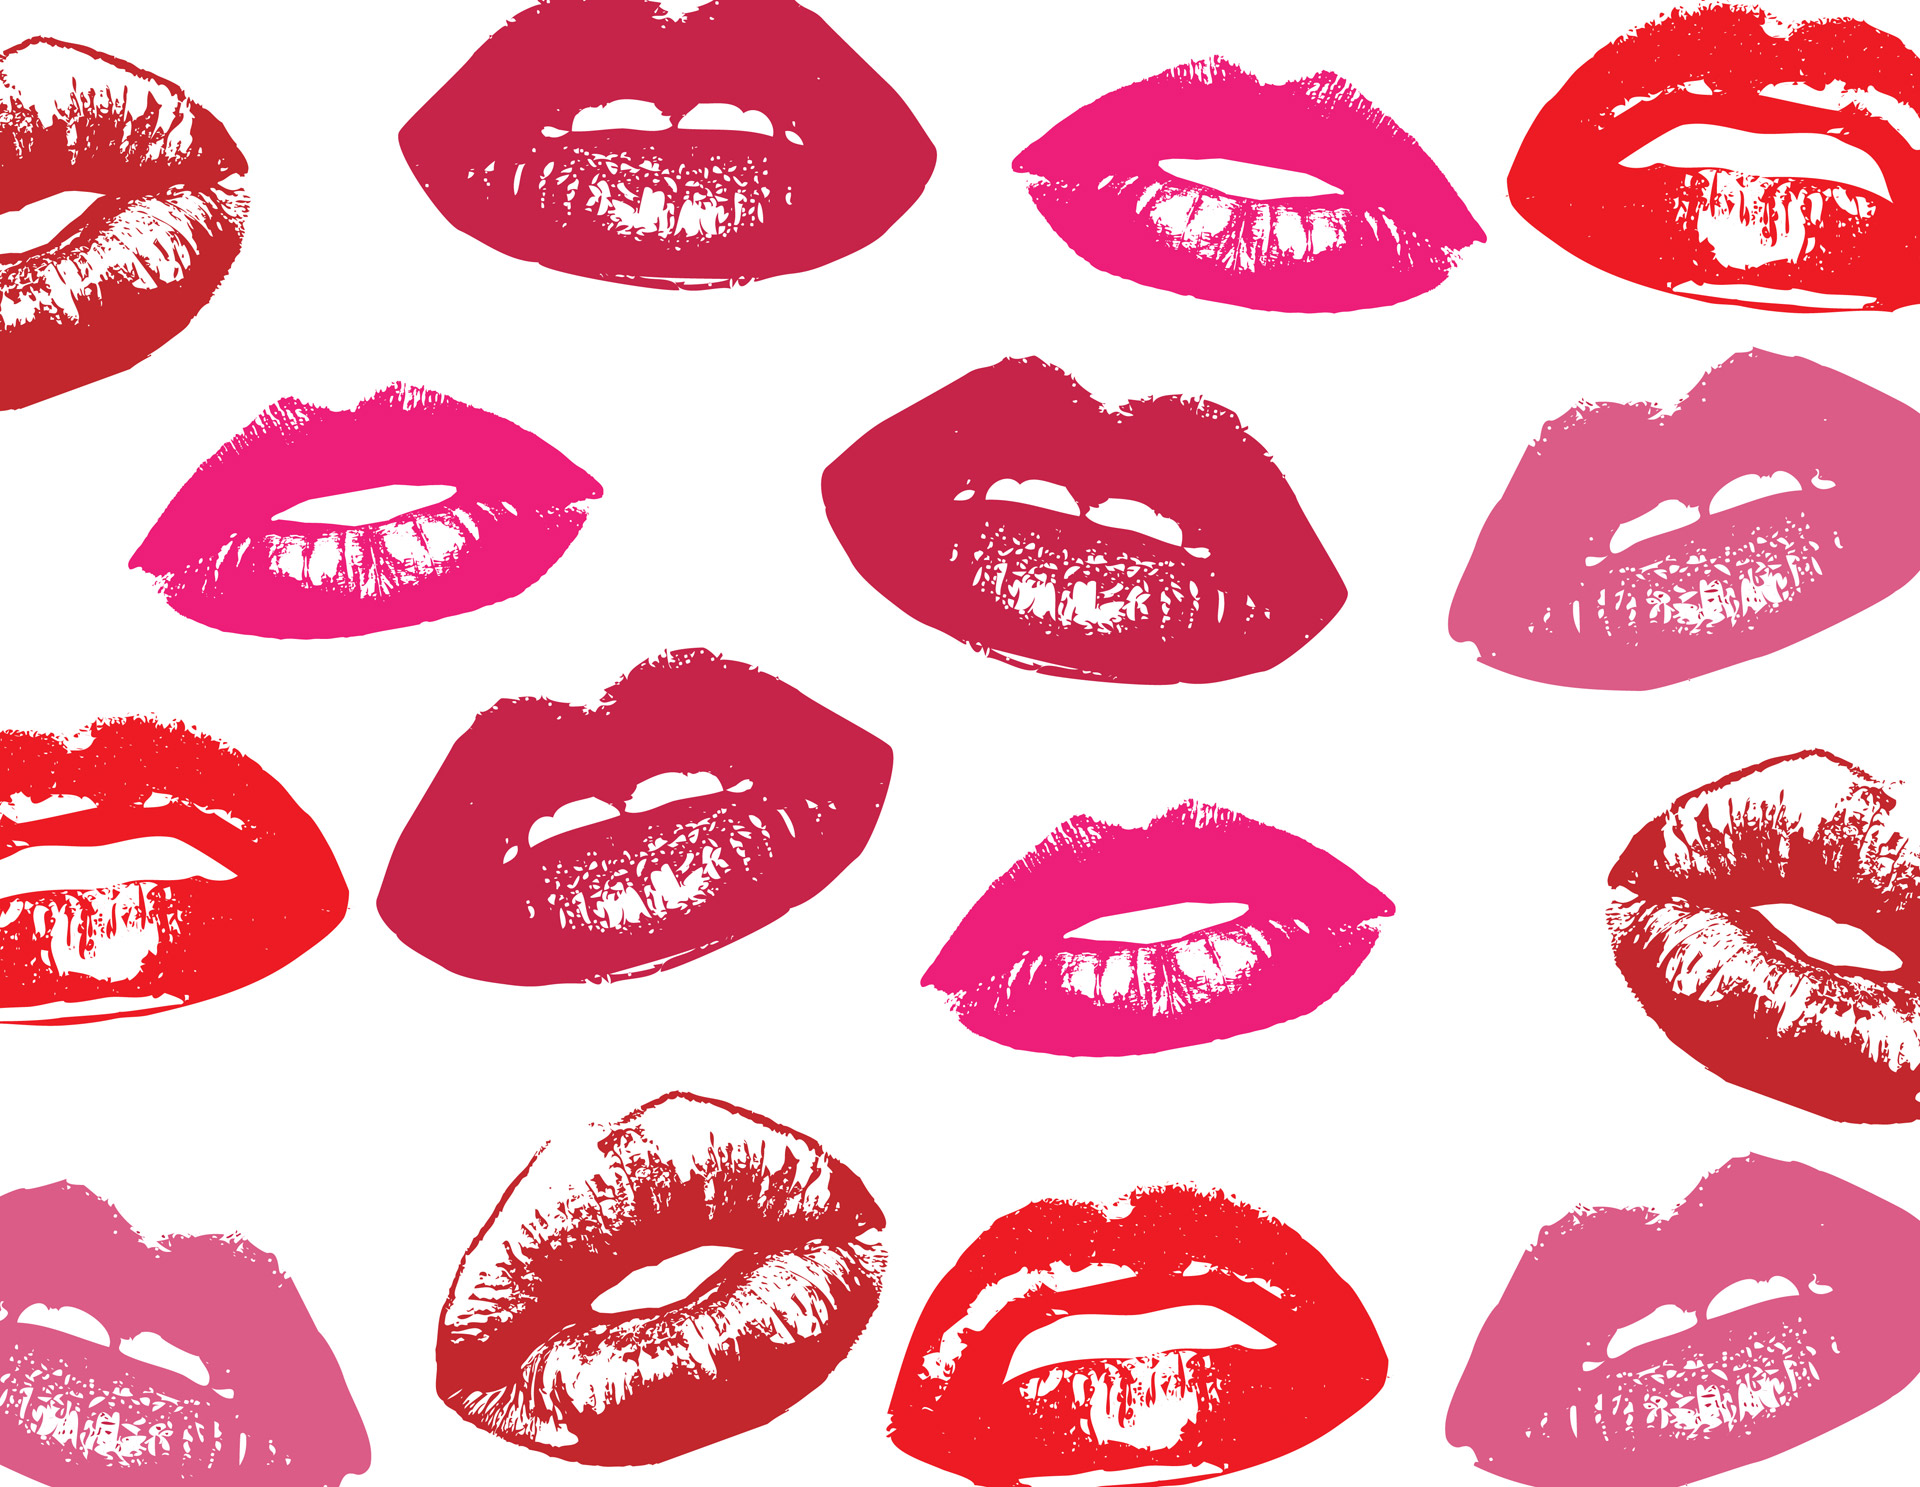 Glossy Lips Wallpaper Background Free Stock Photo   Public Domain